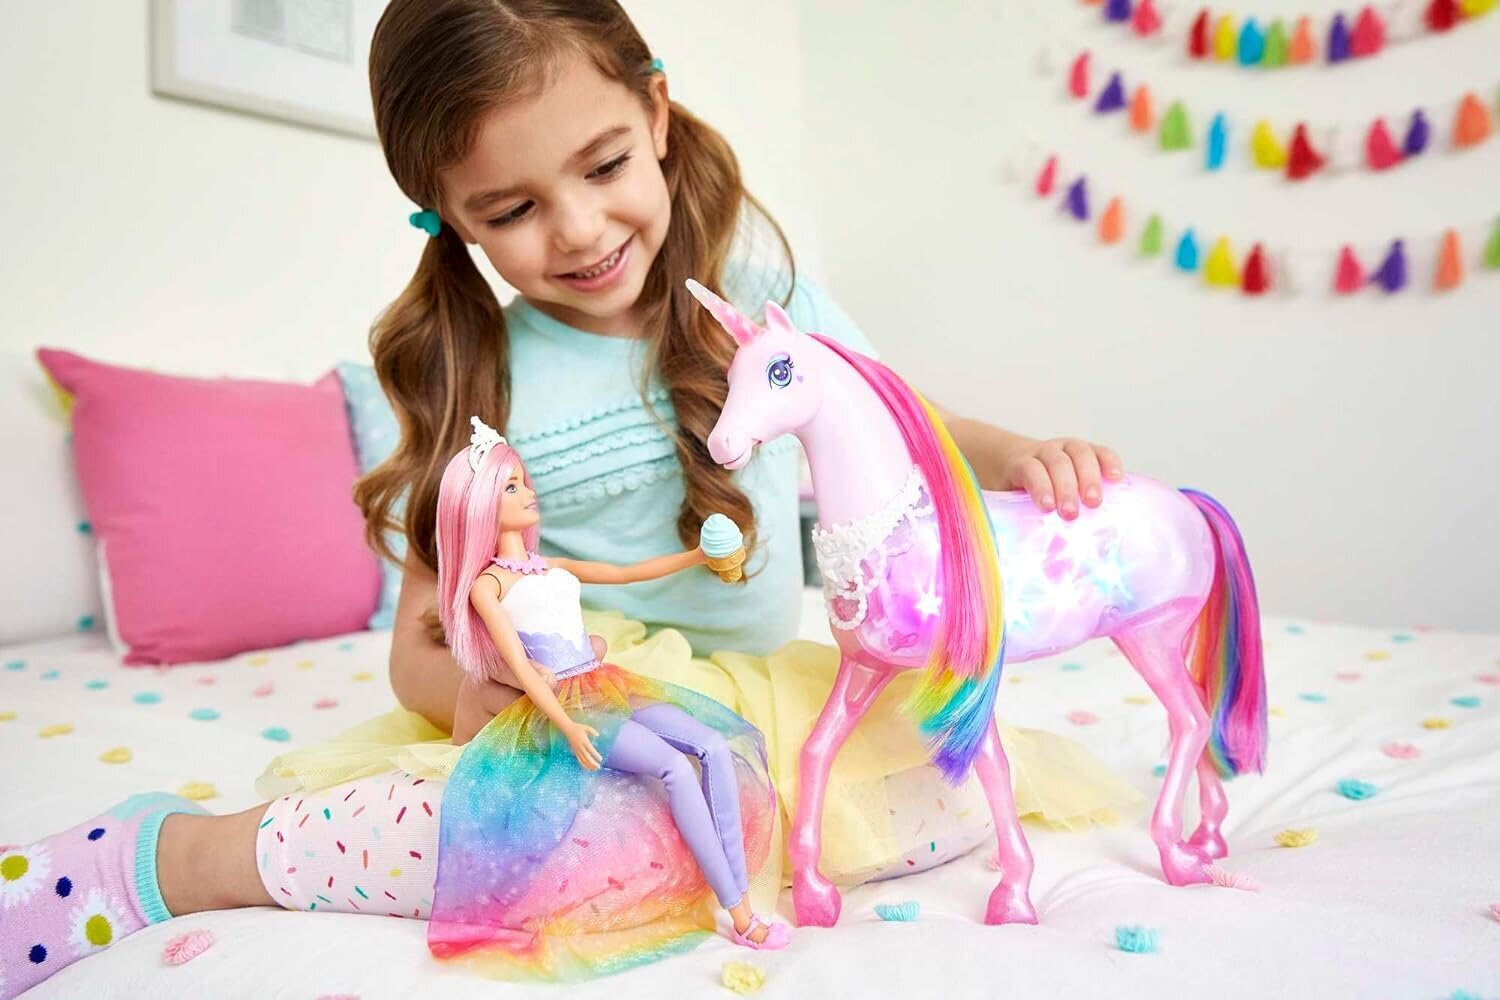 Lėlė Barbie Dreamtopia GWM78 kaina ir informacija | Žaislai mergaitėms | pigu.lt